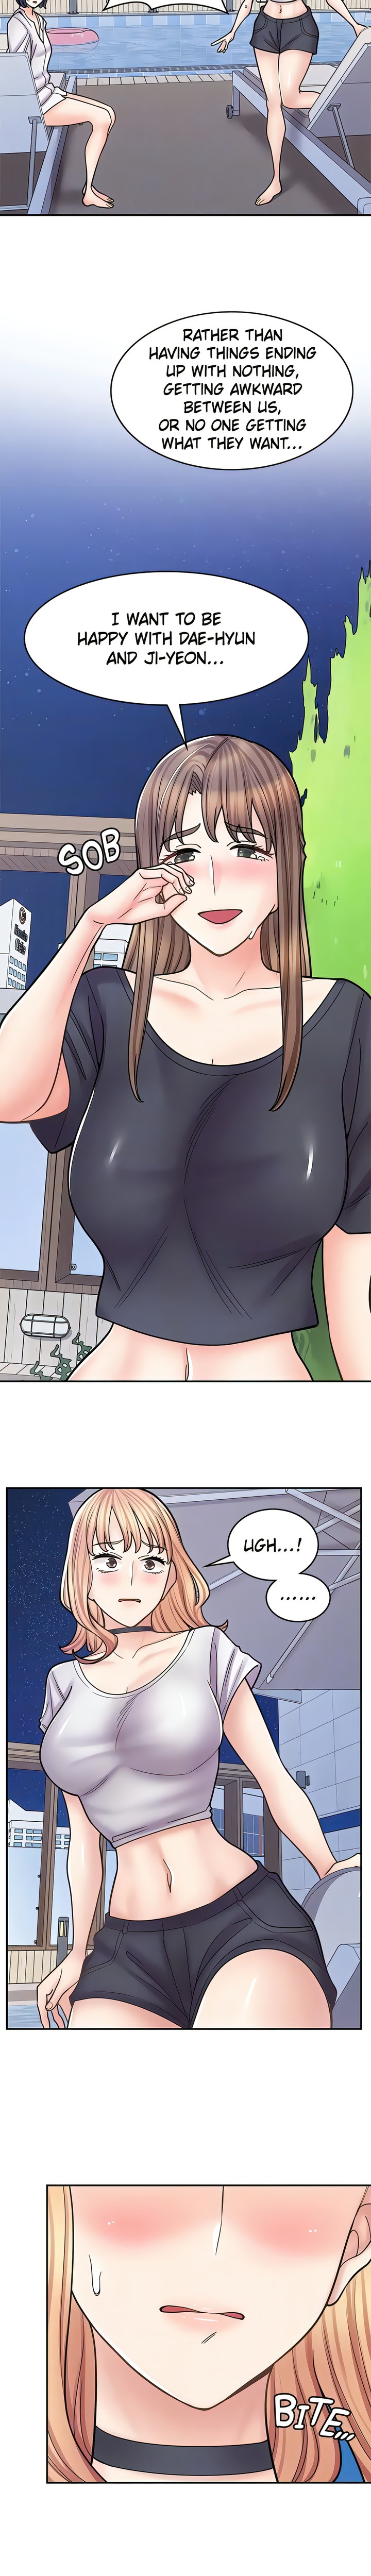 Erotic Manga Café Girls - Chapter 55 Page 18